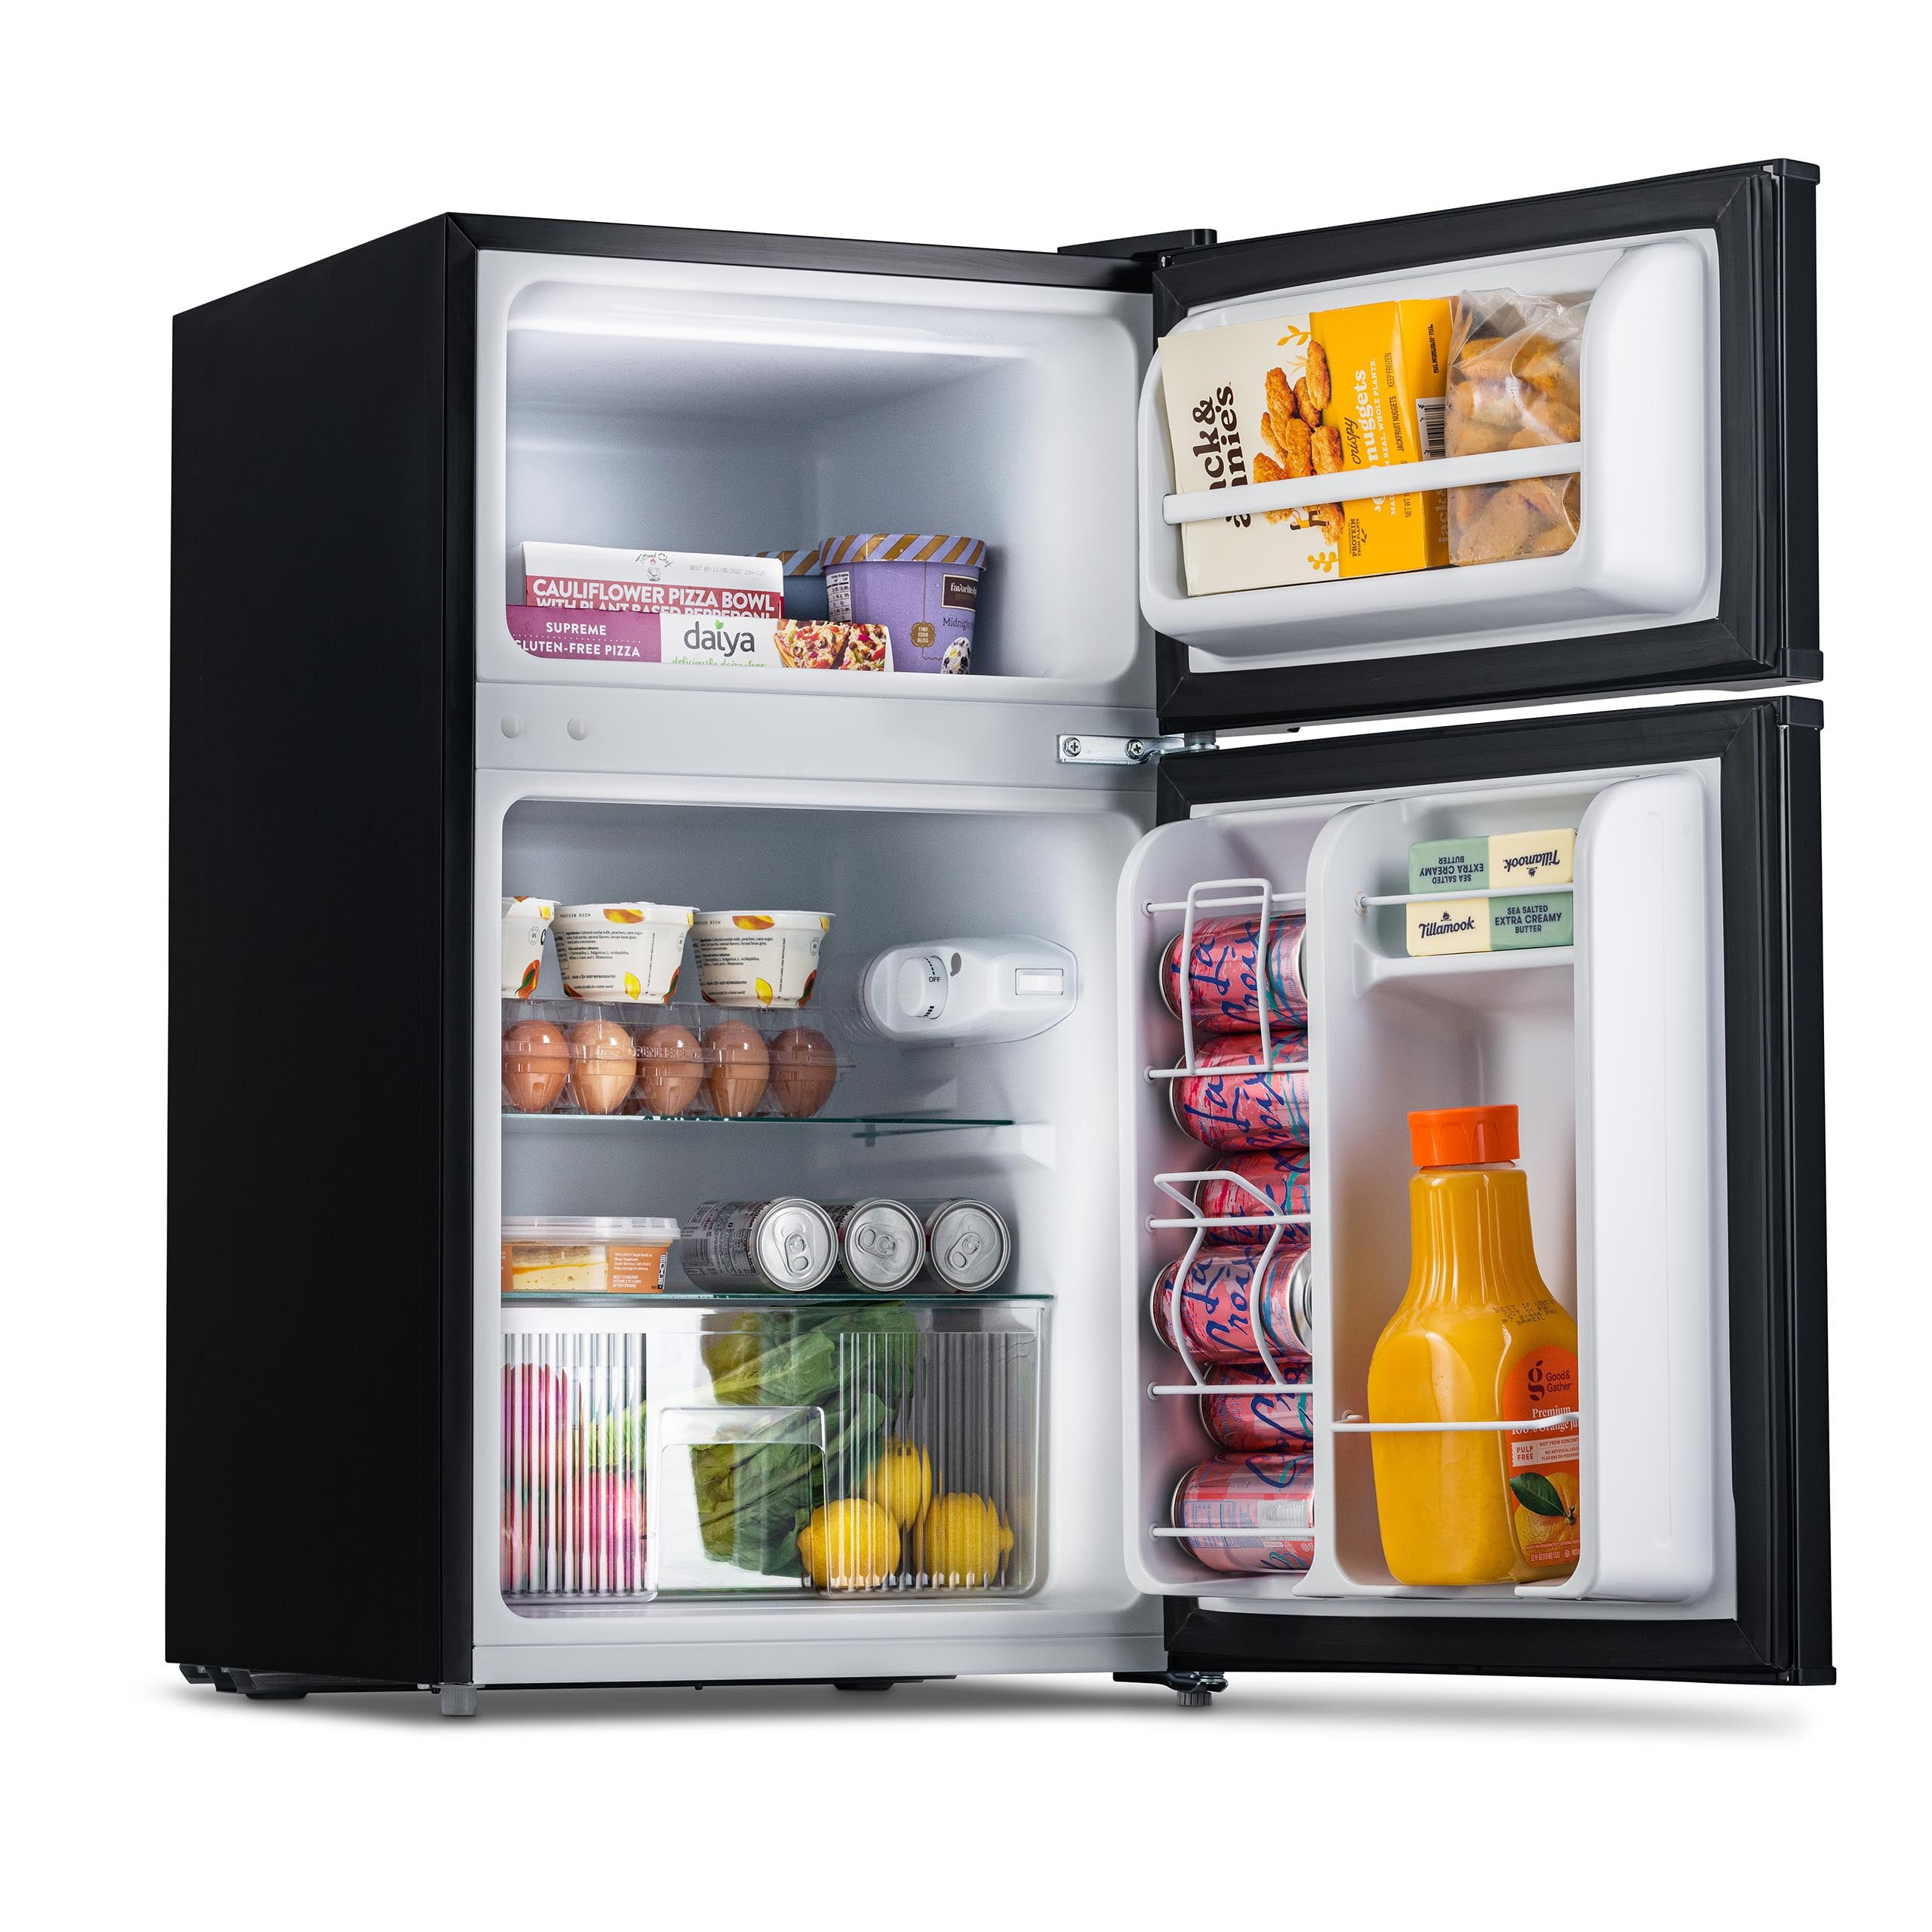 NewAir 3.3 Cu. ft. Compact Mini Refrigerator with Freezer, Can Dispenser - Gray